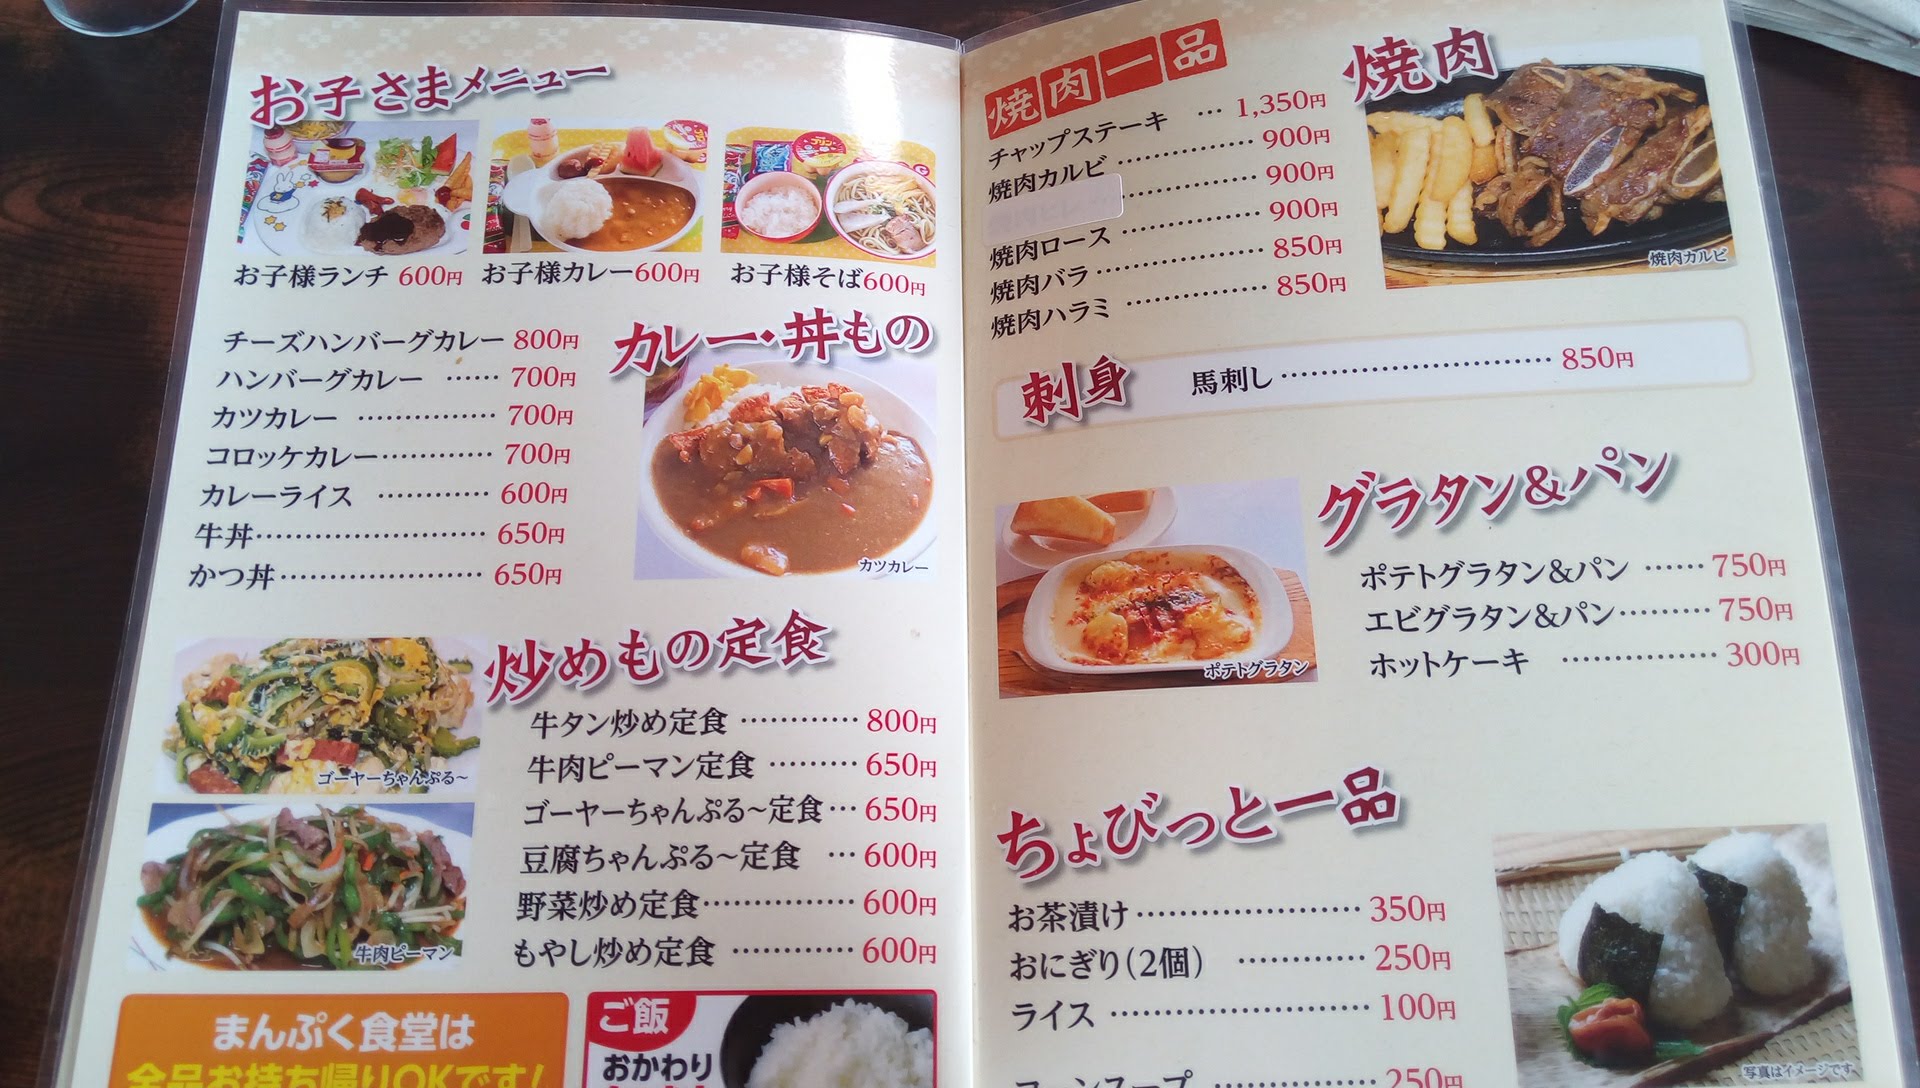 The menu of Manpuku restaurant 2